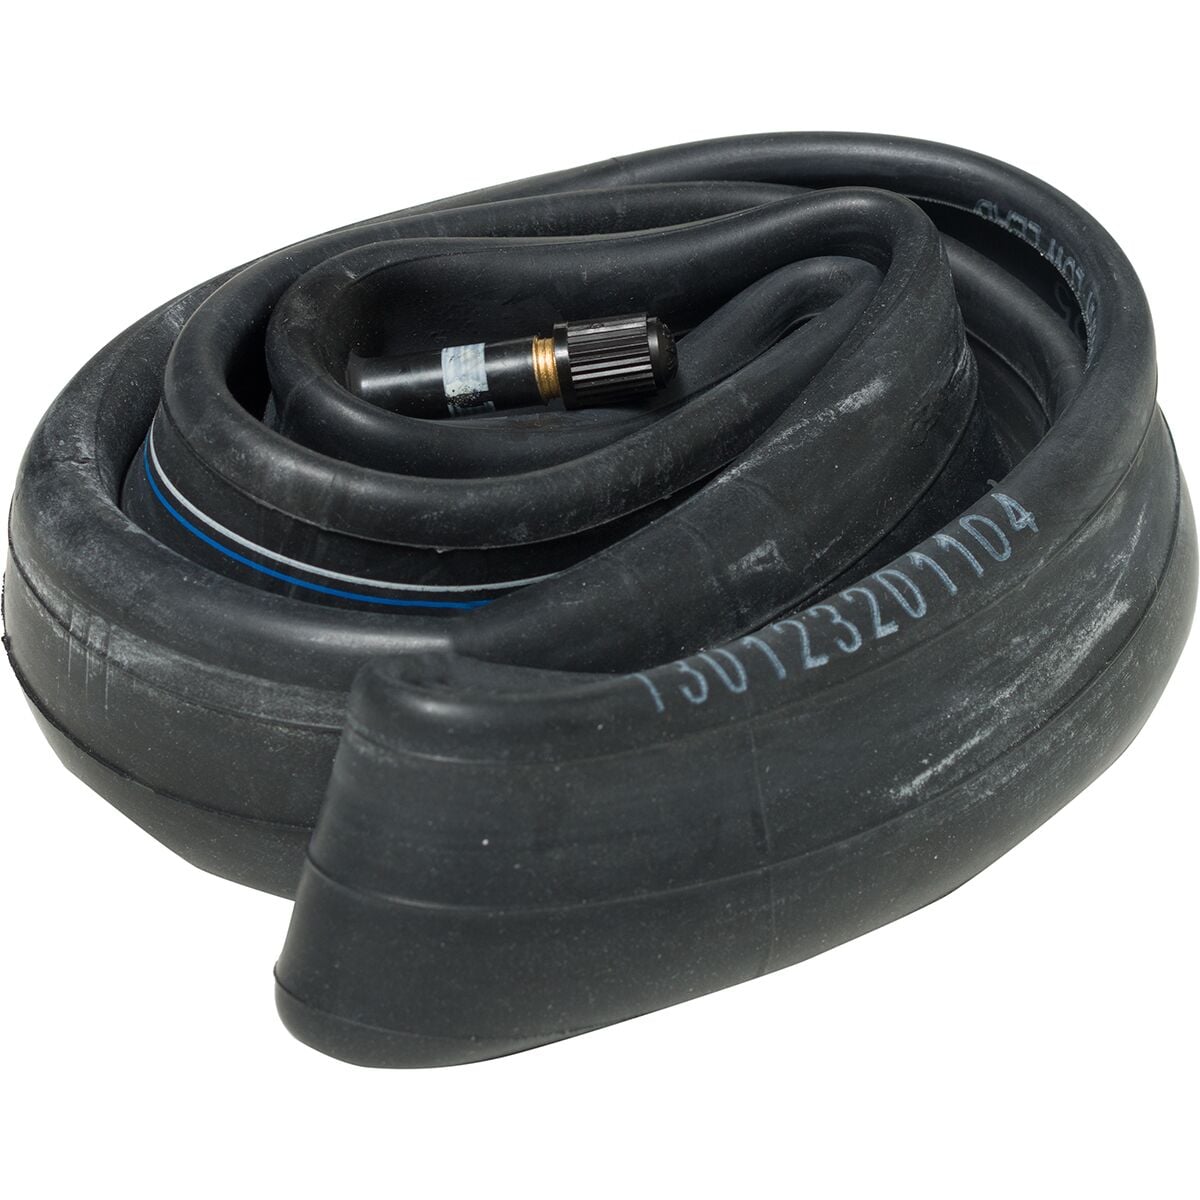 Teravail 16in Protection Schrader Tube Black, 16in x 1.75-2.35in, 35mm schrader valve